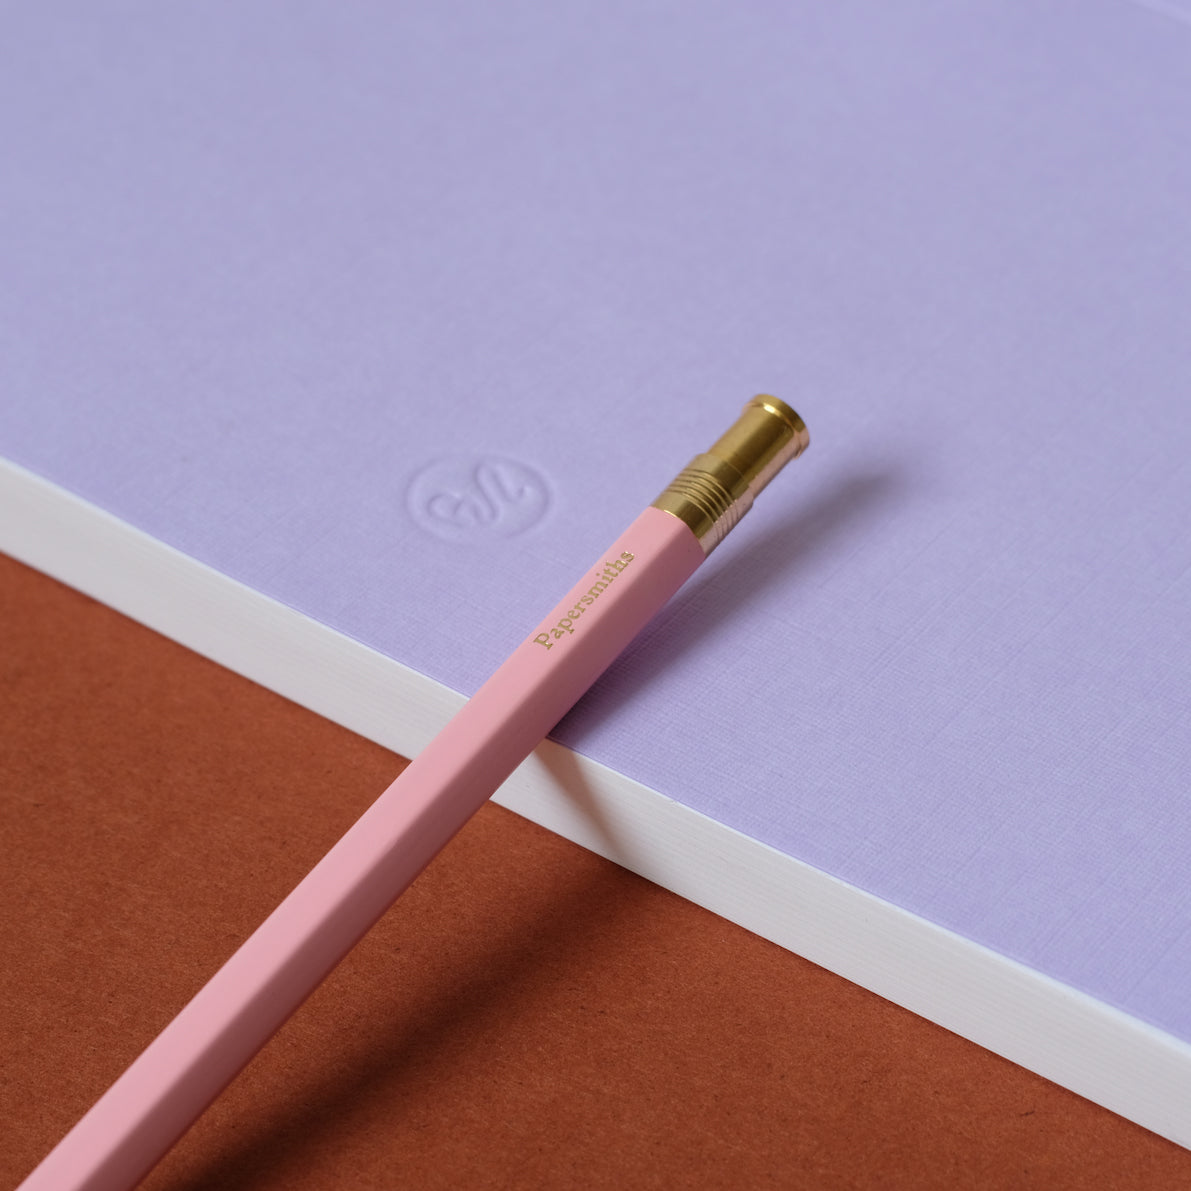 Marais Notebook and Pen Duo - Everyday Pen / Plain Paper